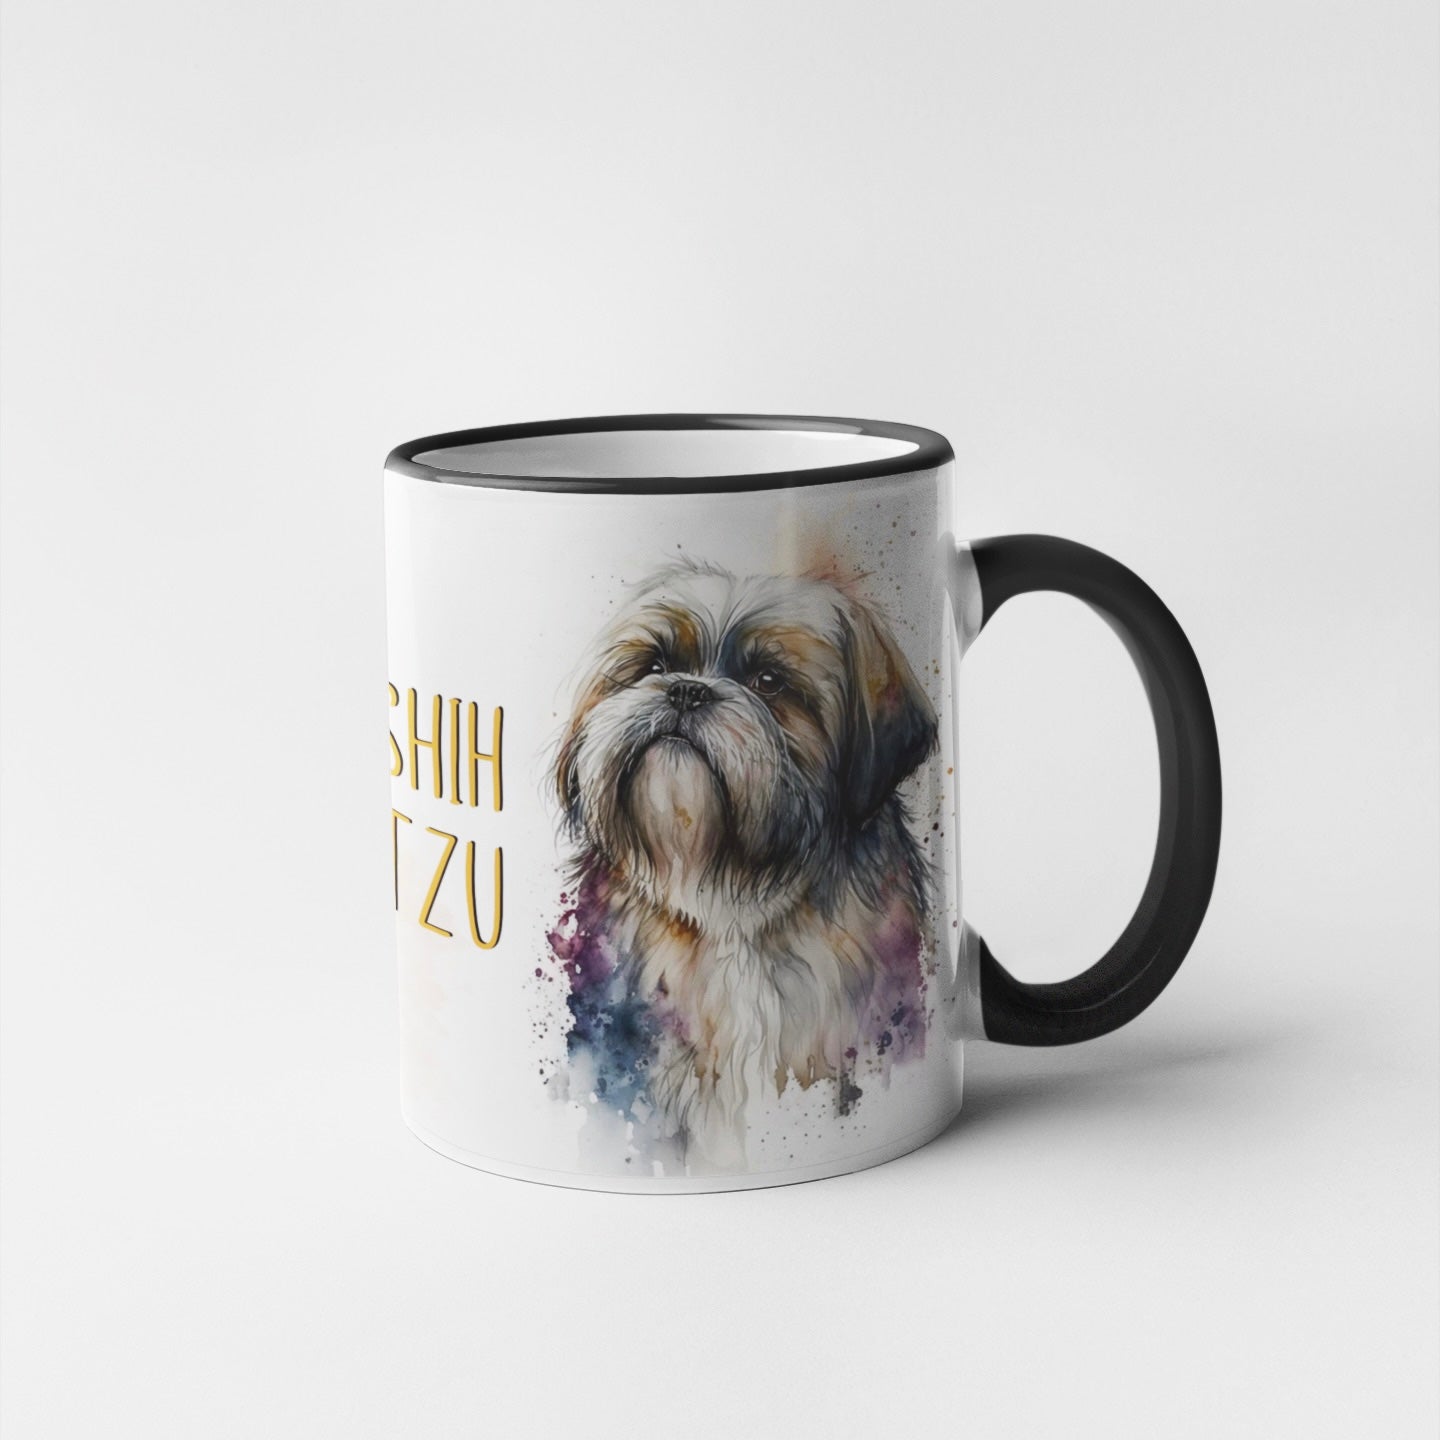 Shih Tzu Dogs Collection Art Personalised Ceramic Mug Gift Idea